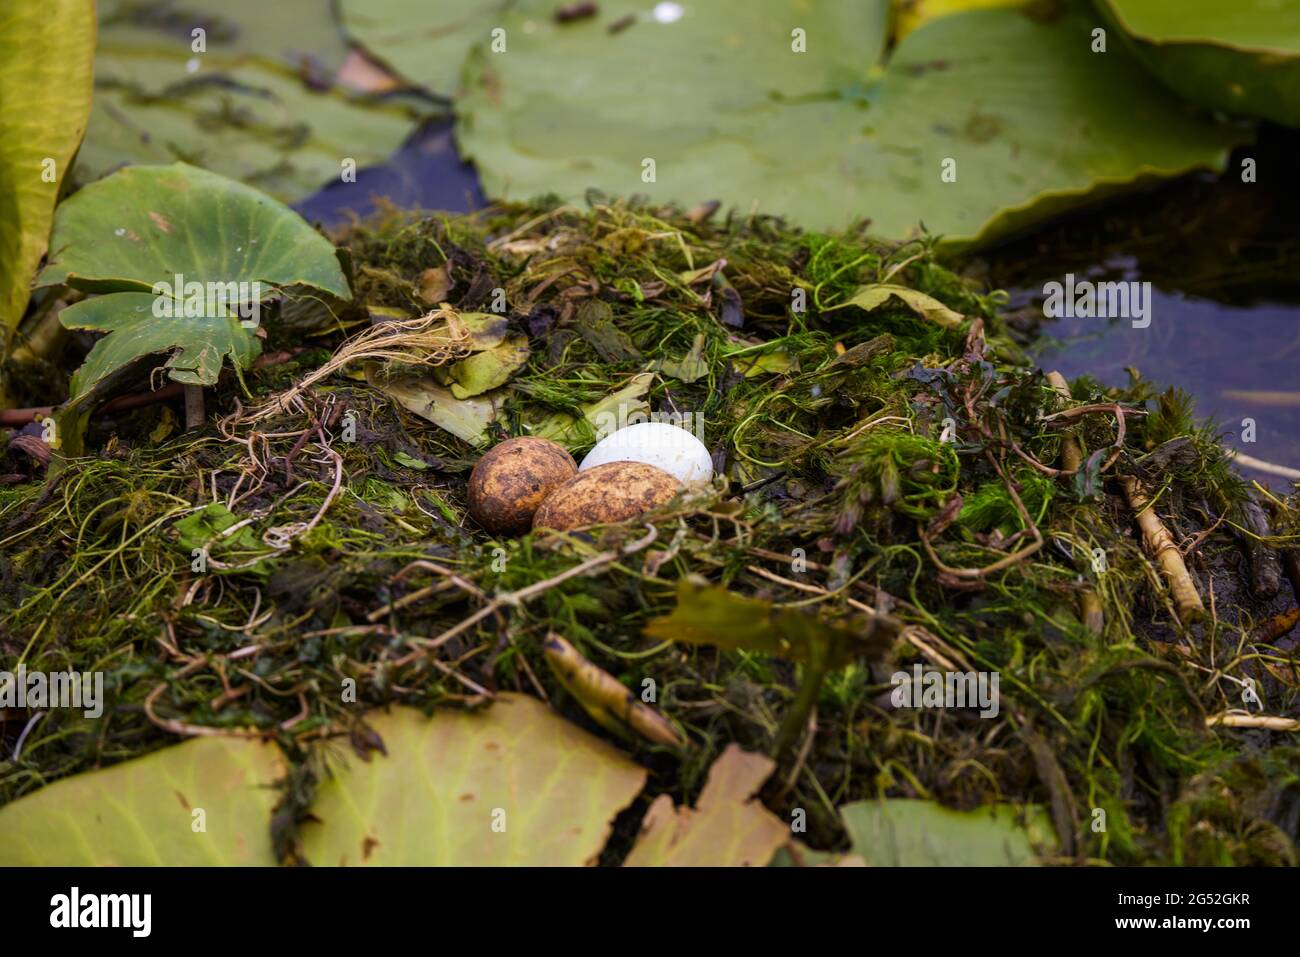 nest with eggs of some birds (stern hirundo) on vegetation in the Danube Delta. Stock Photo